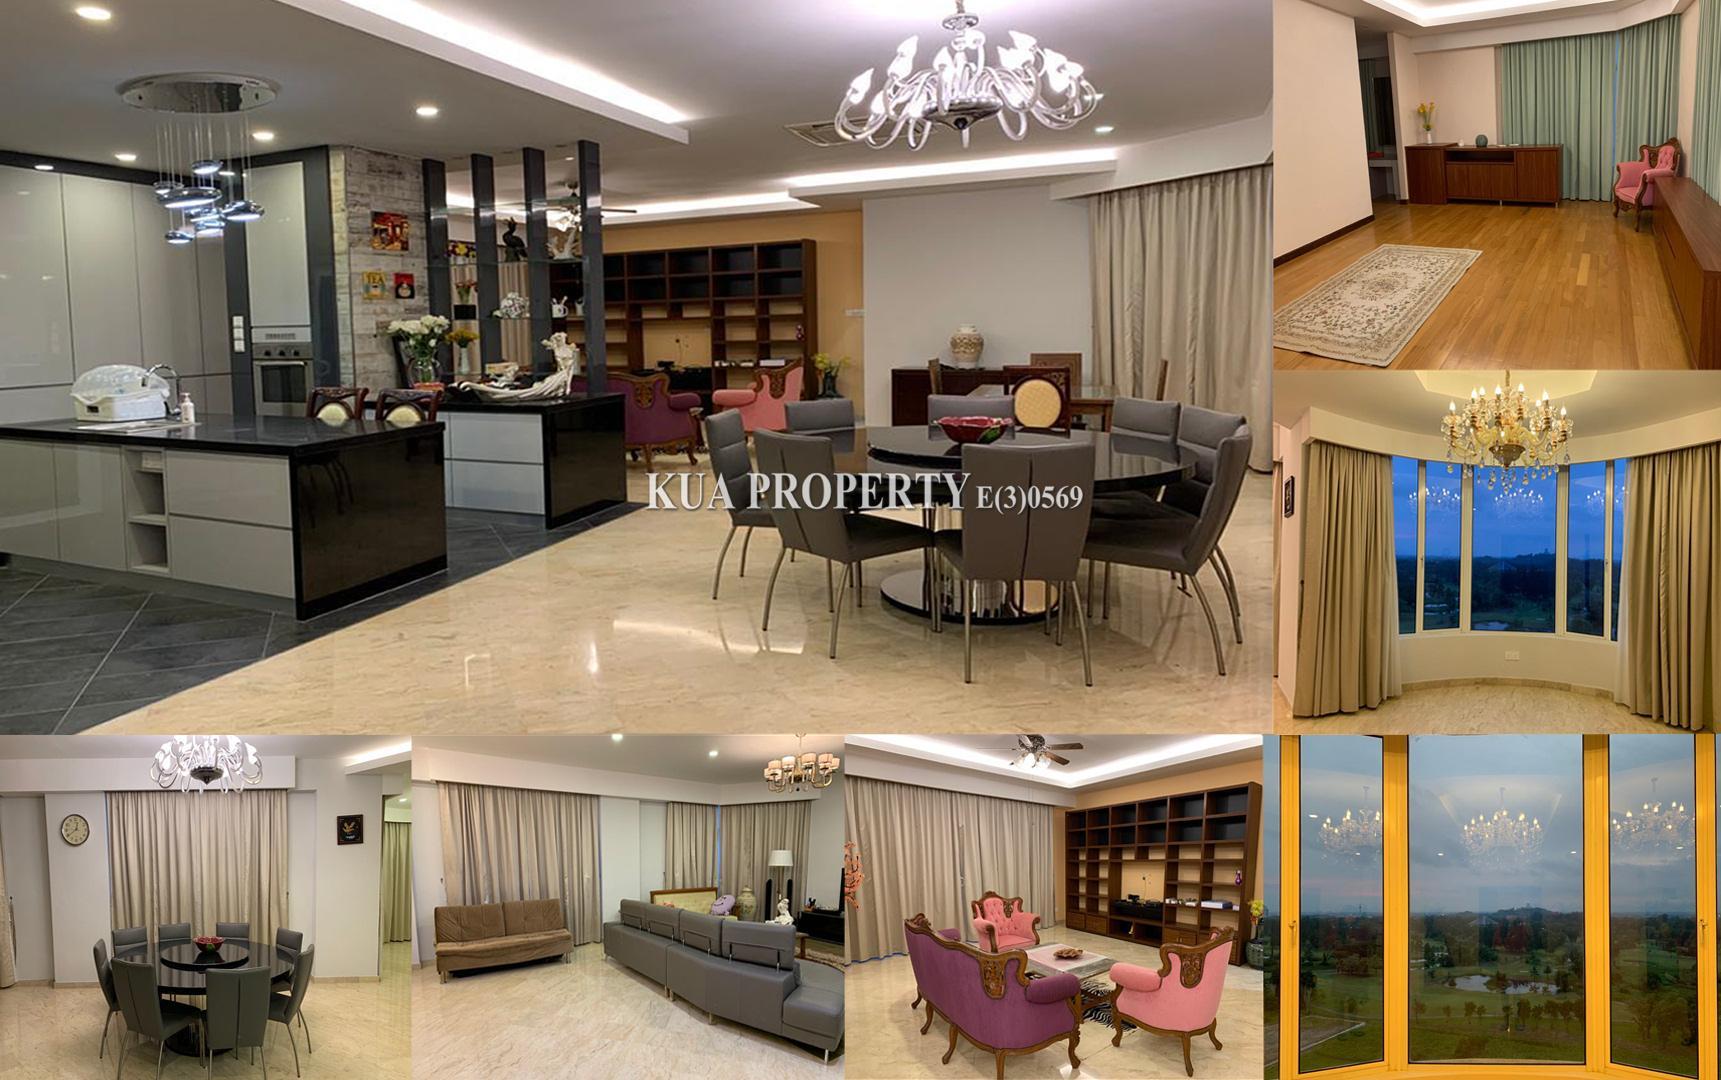 Fully Furnshed Kasuma Condominium Penthouse For Rent! at Petra Jaya, Kuching